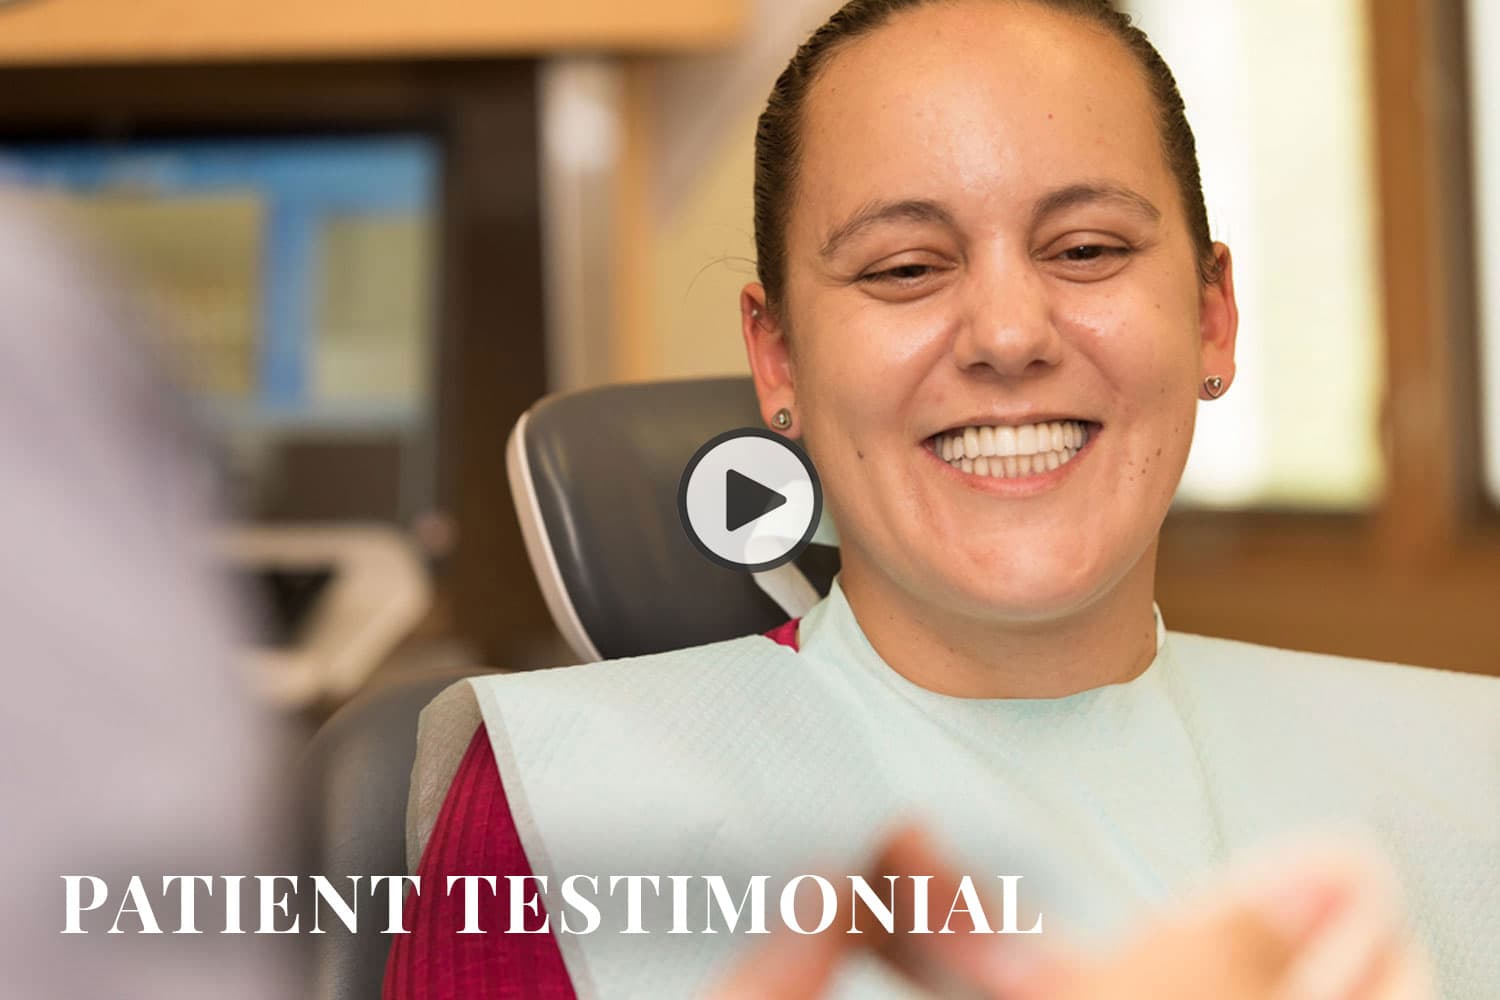 Dental Visions patient testimonials